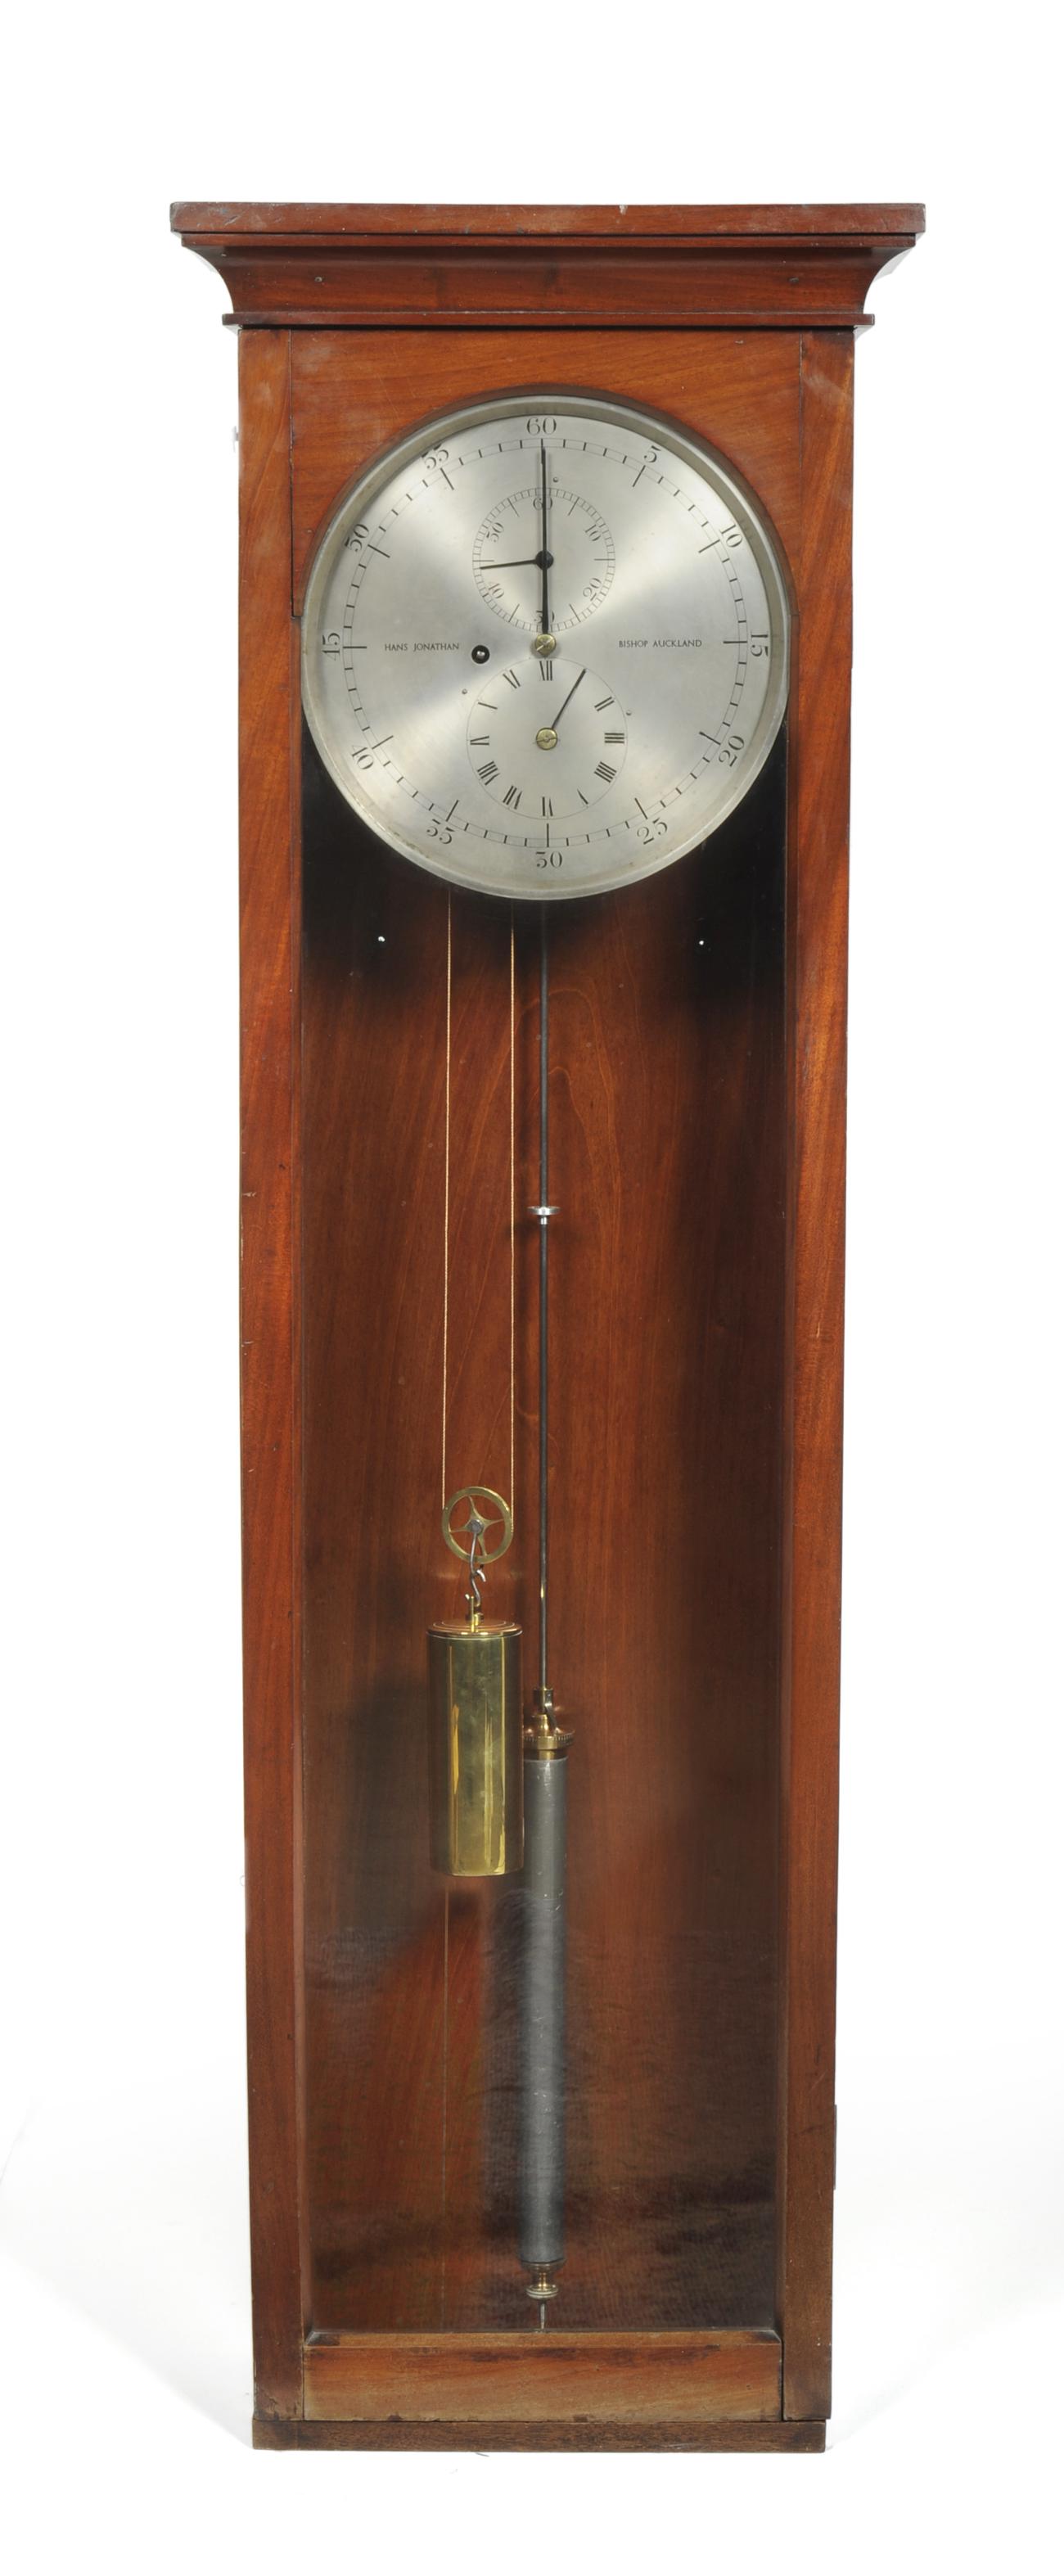 A Mahogany Regulator Wall Timepiece, signed Hans Jonathan, Bishop Auckland, glazed door, 12-inch